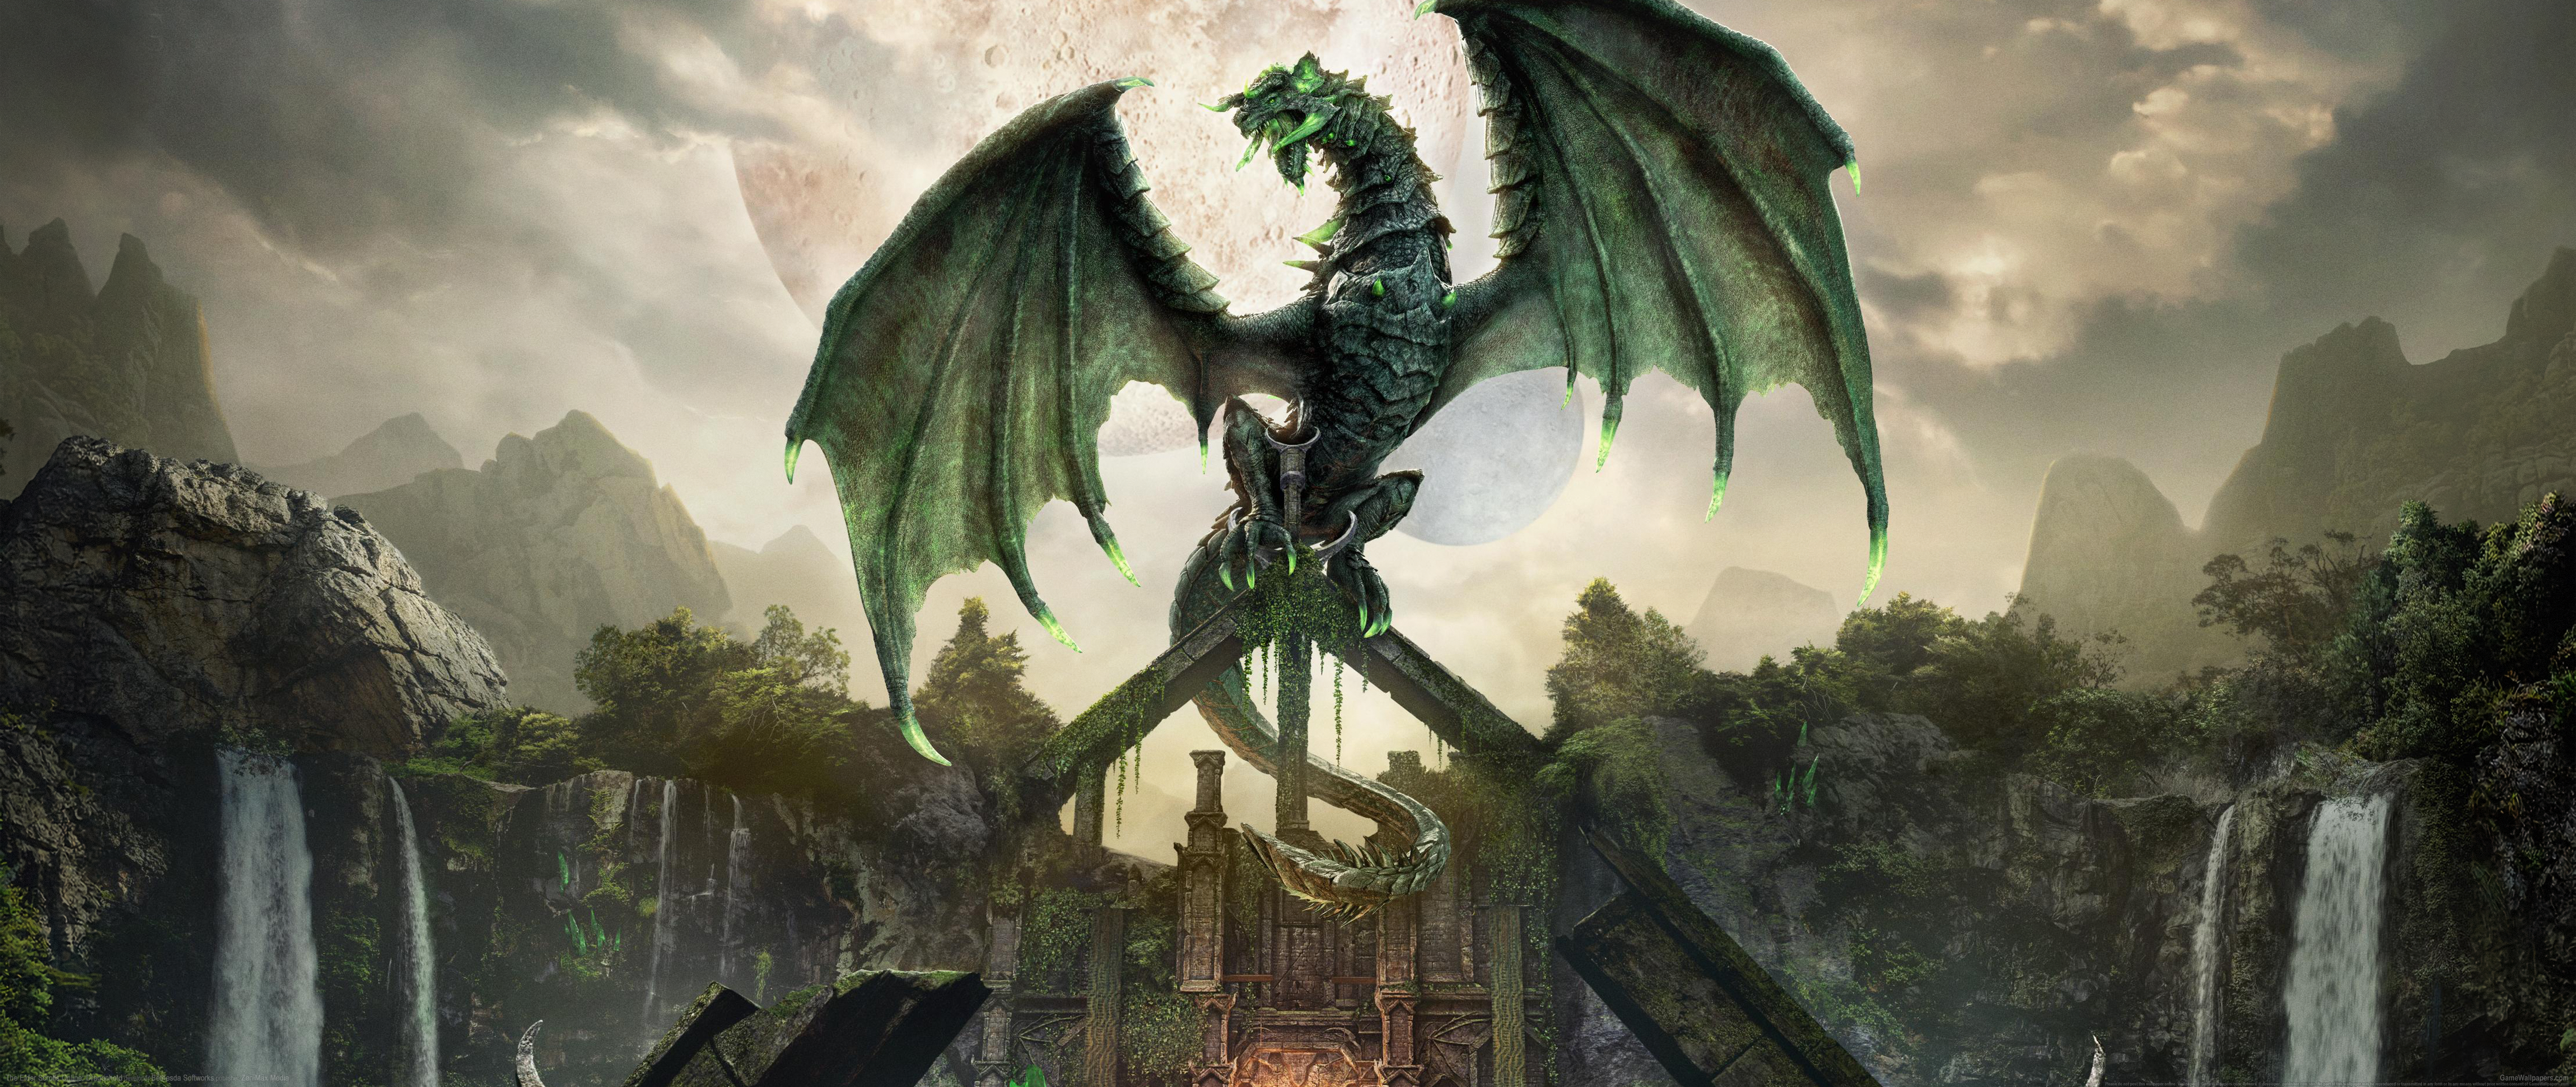 The Elder Scrolls Online: Dragonhold 5120x2160 wallpaper or background 01